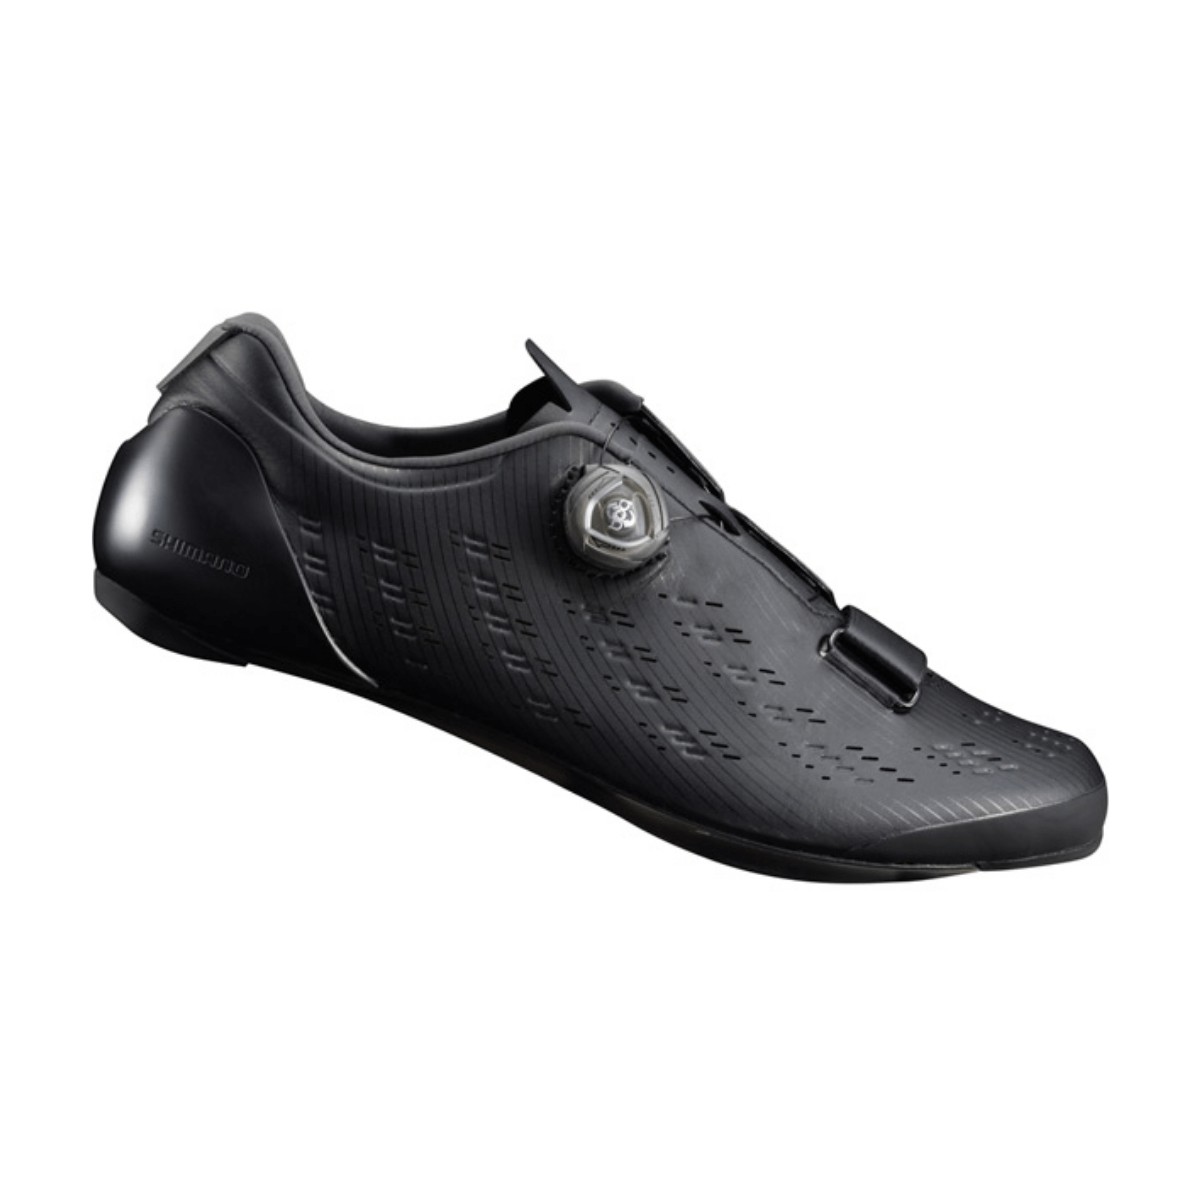 Shimano RP901 Black - Road Shoes, Size 38 - EUR